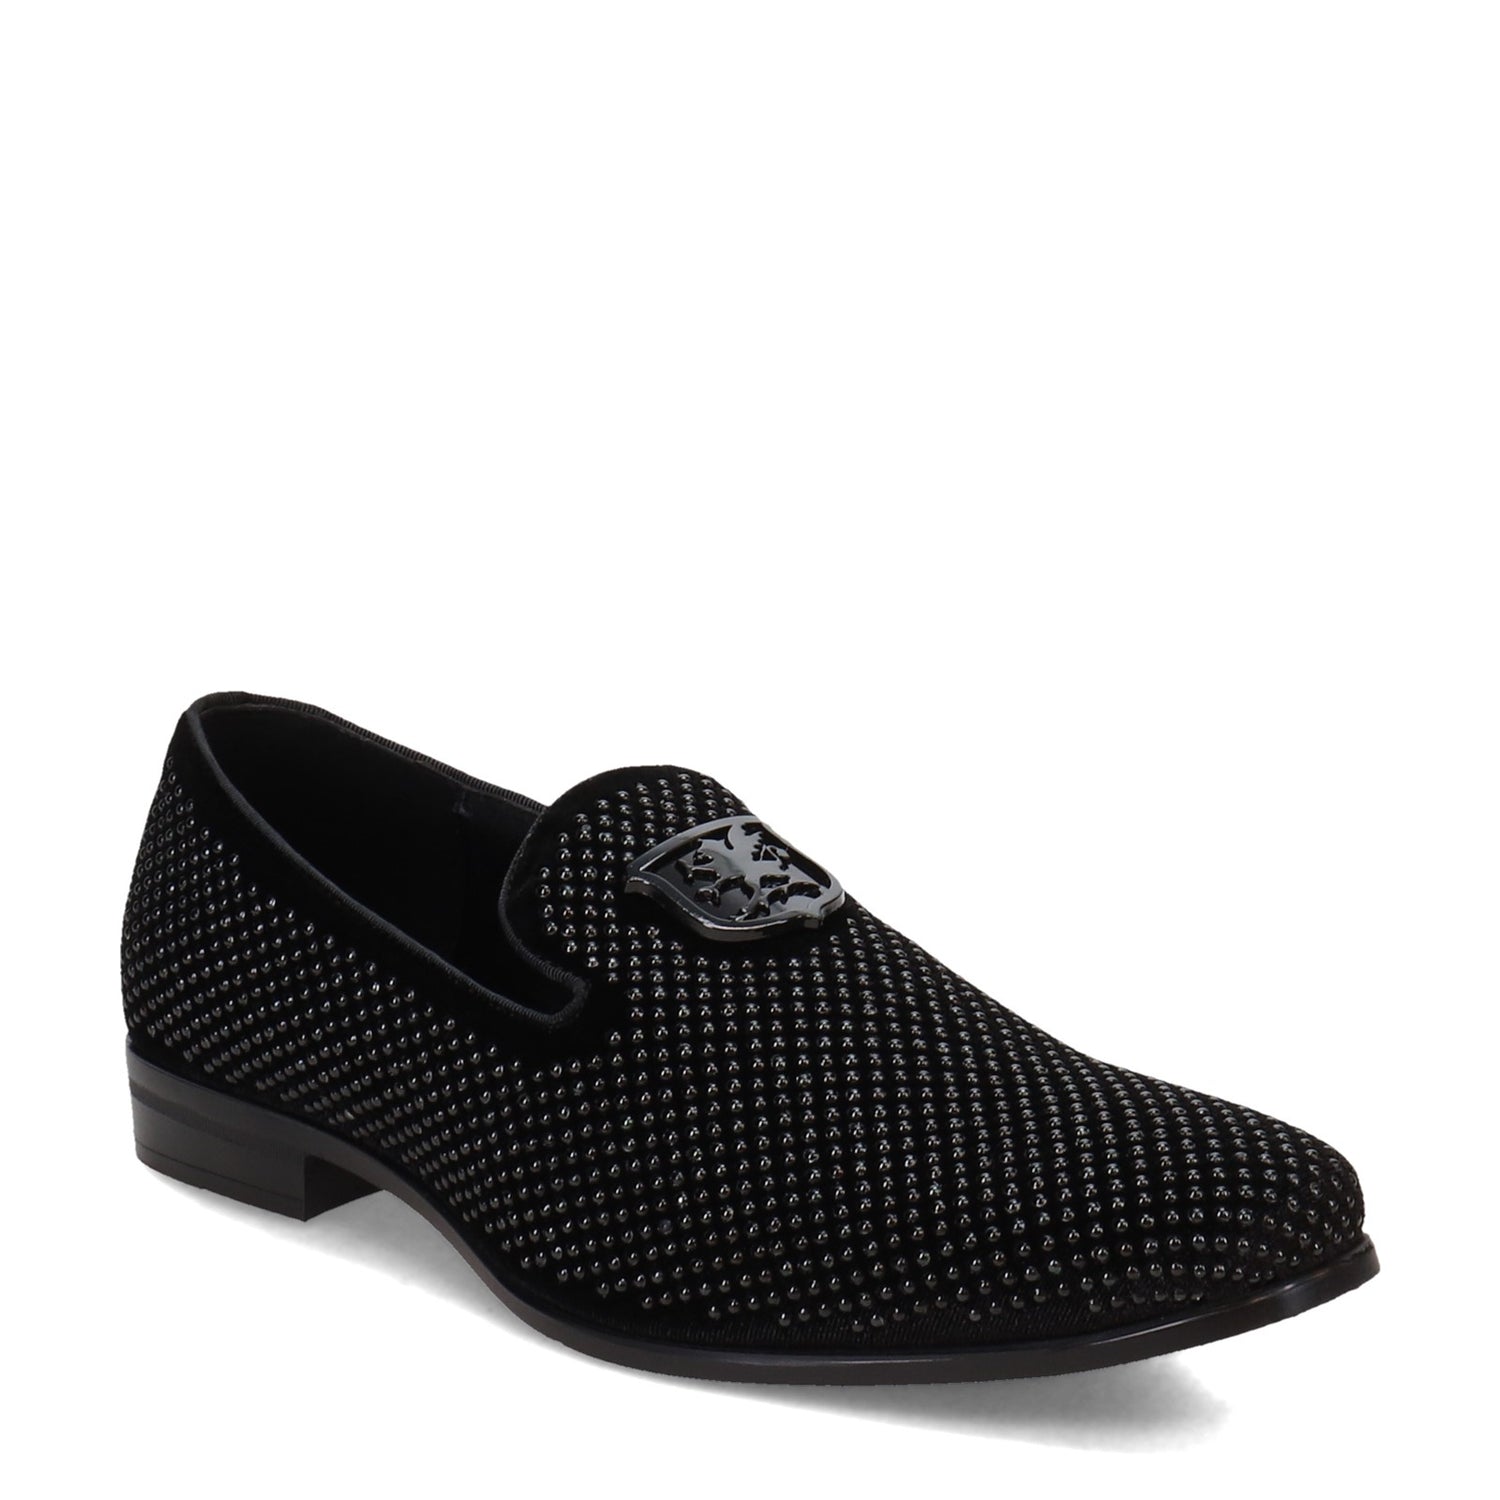 Peltz Shoes  Men's Stacy Adams Swagger Loafer Black 25228-001